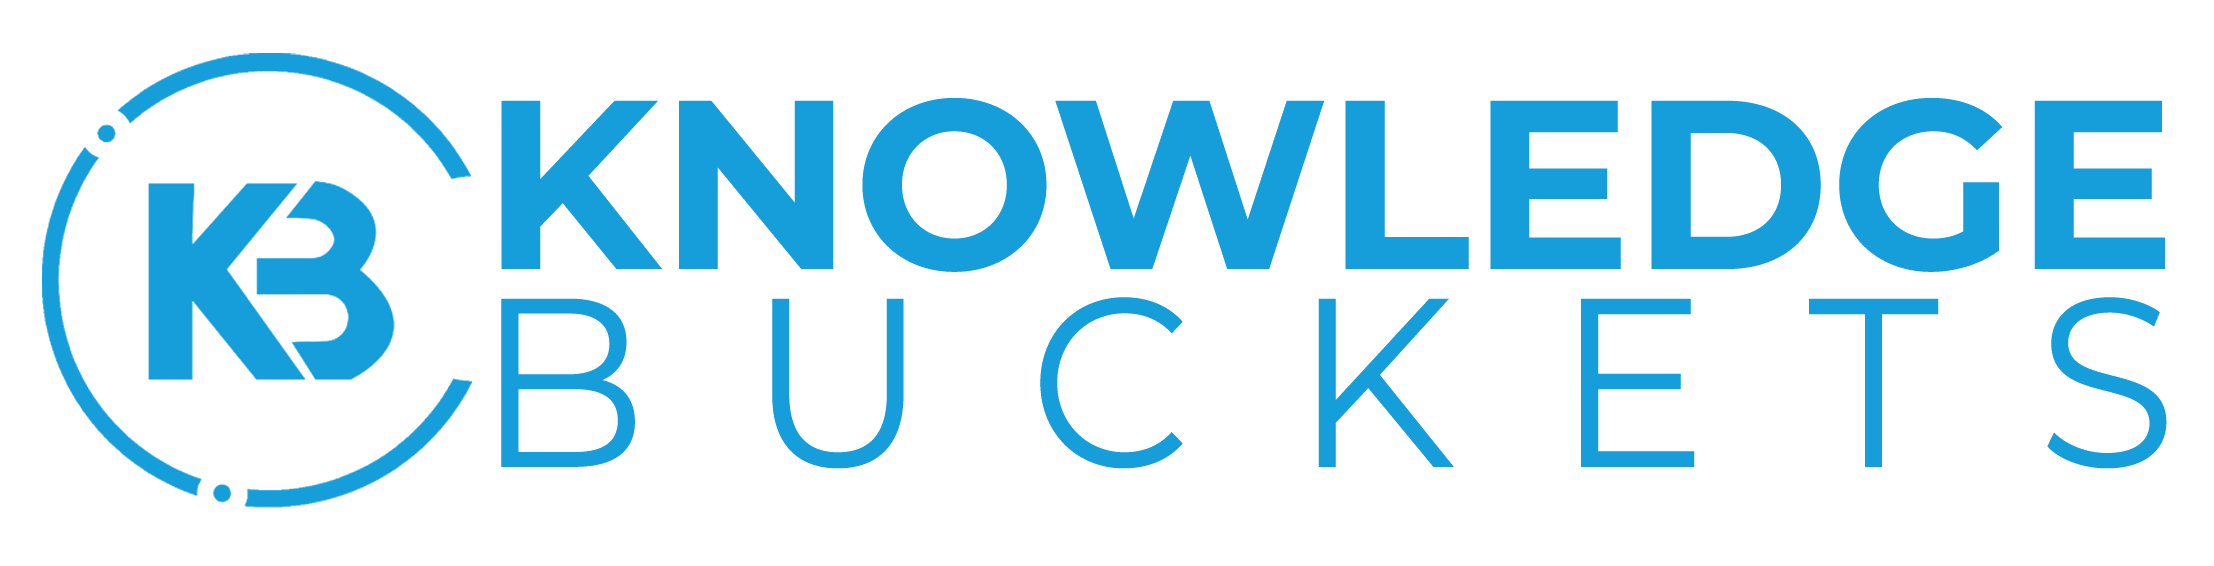 knowledge buckets logo